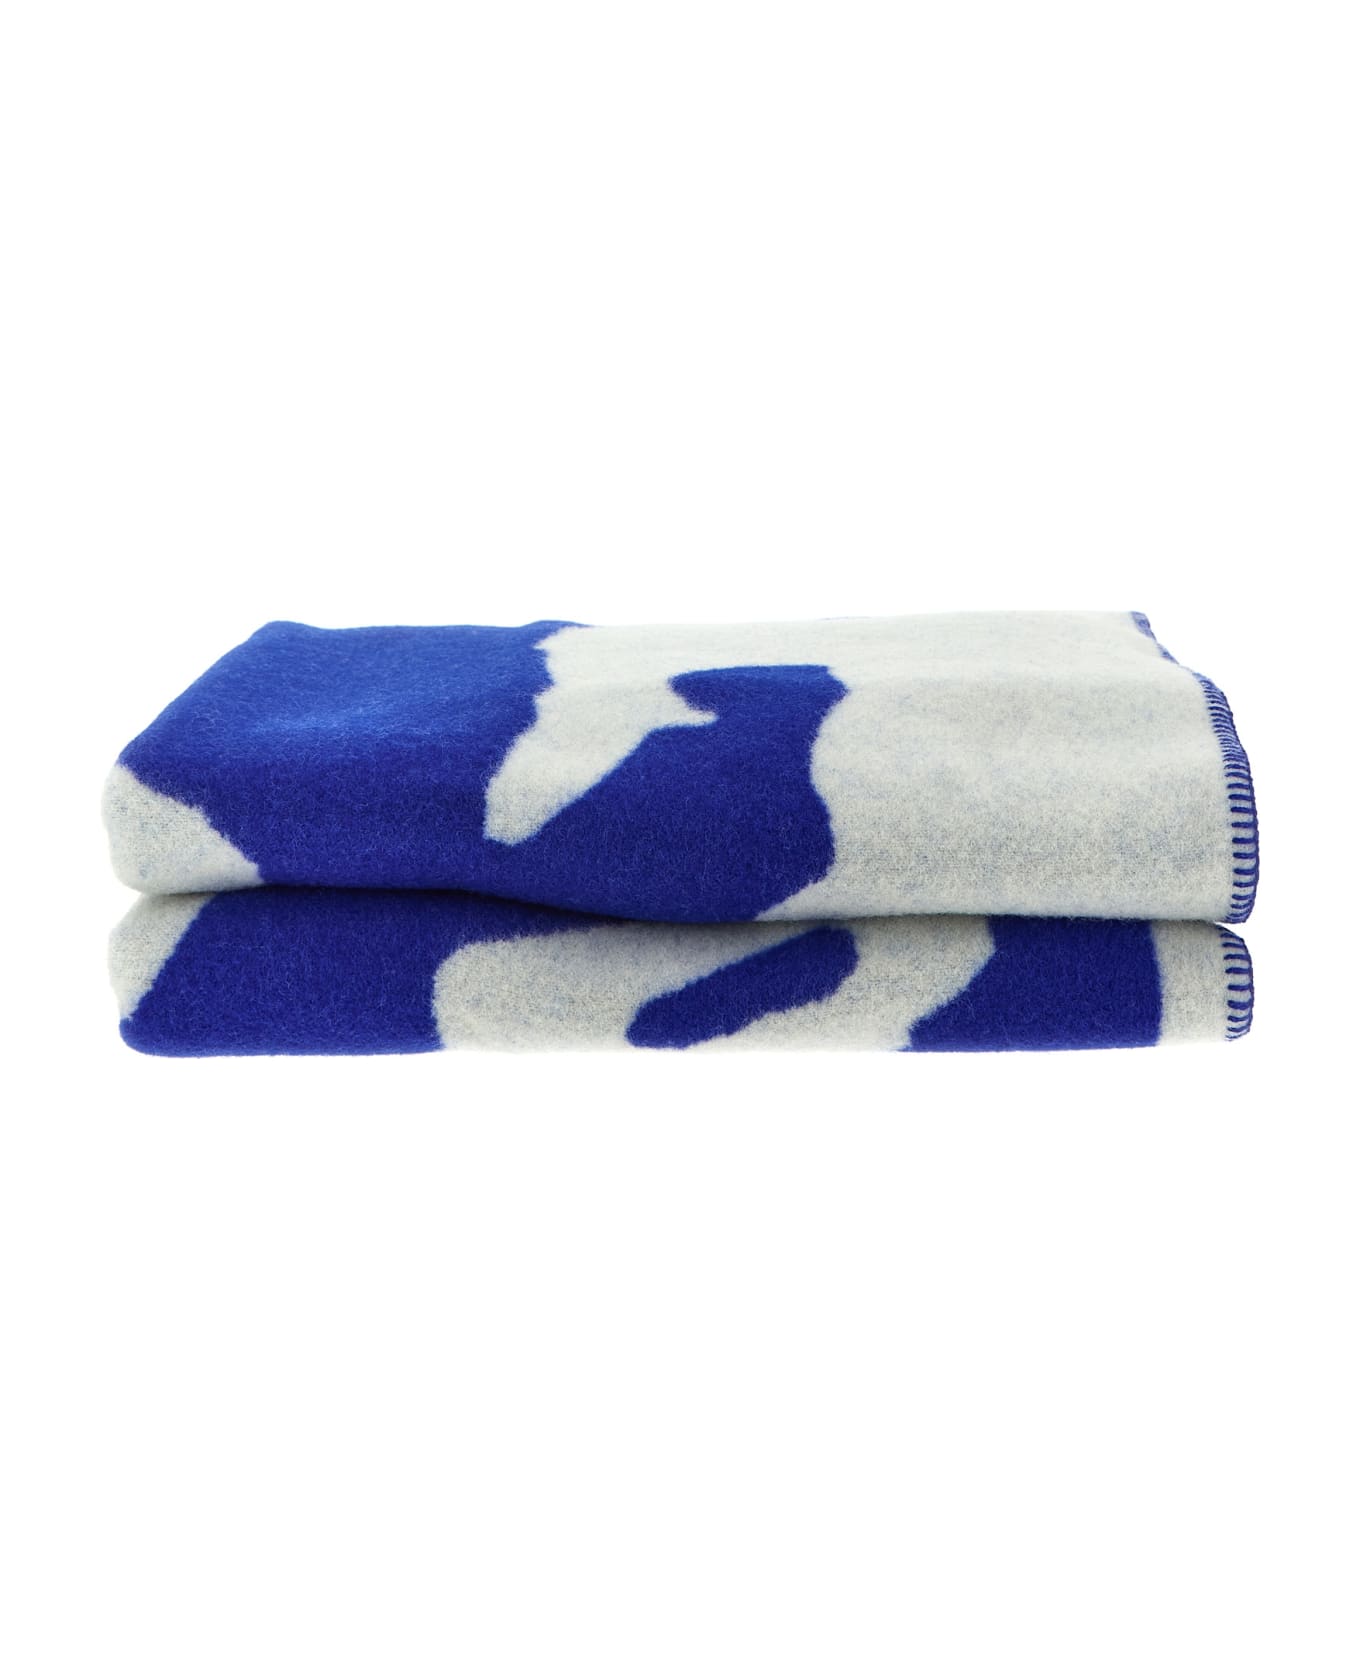 Burberry Logo Blanket - Blue スカーフ